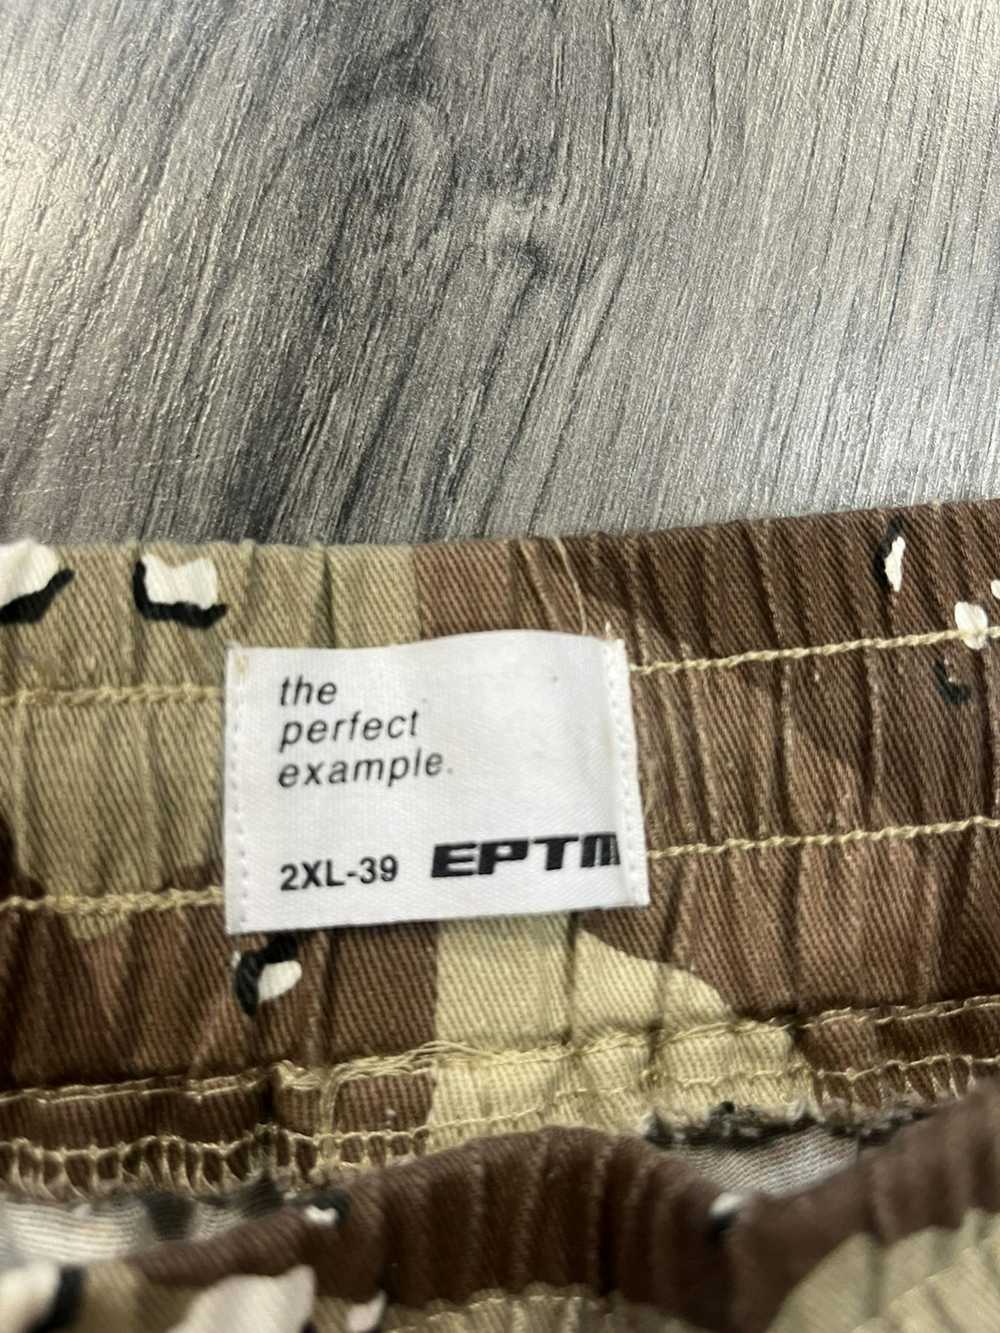 Eptm EPTM camo pants - image 3